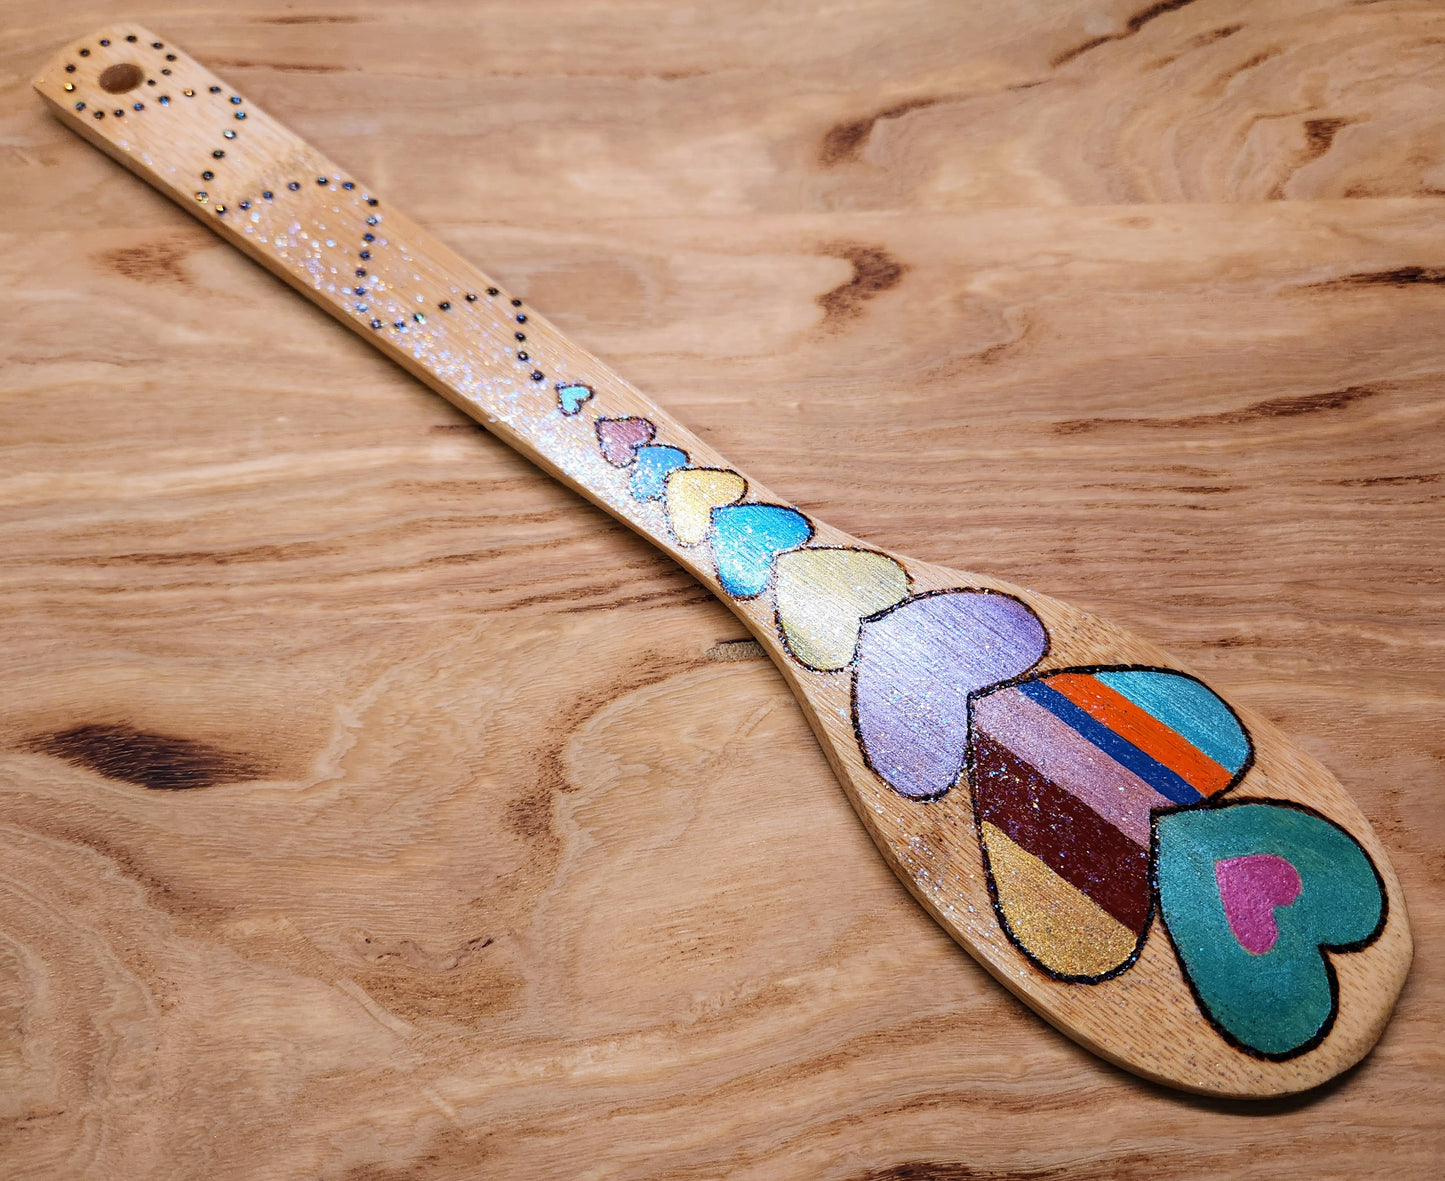 Stir in Love Wooden Spoon